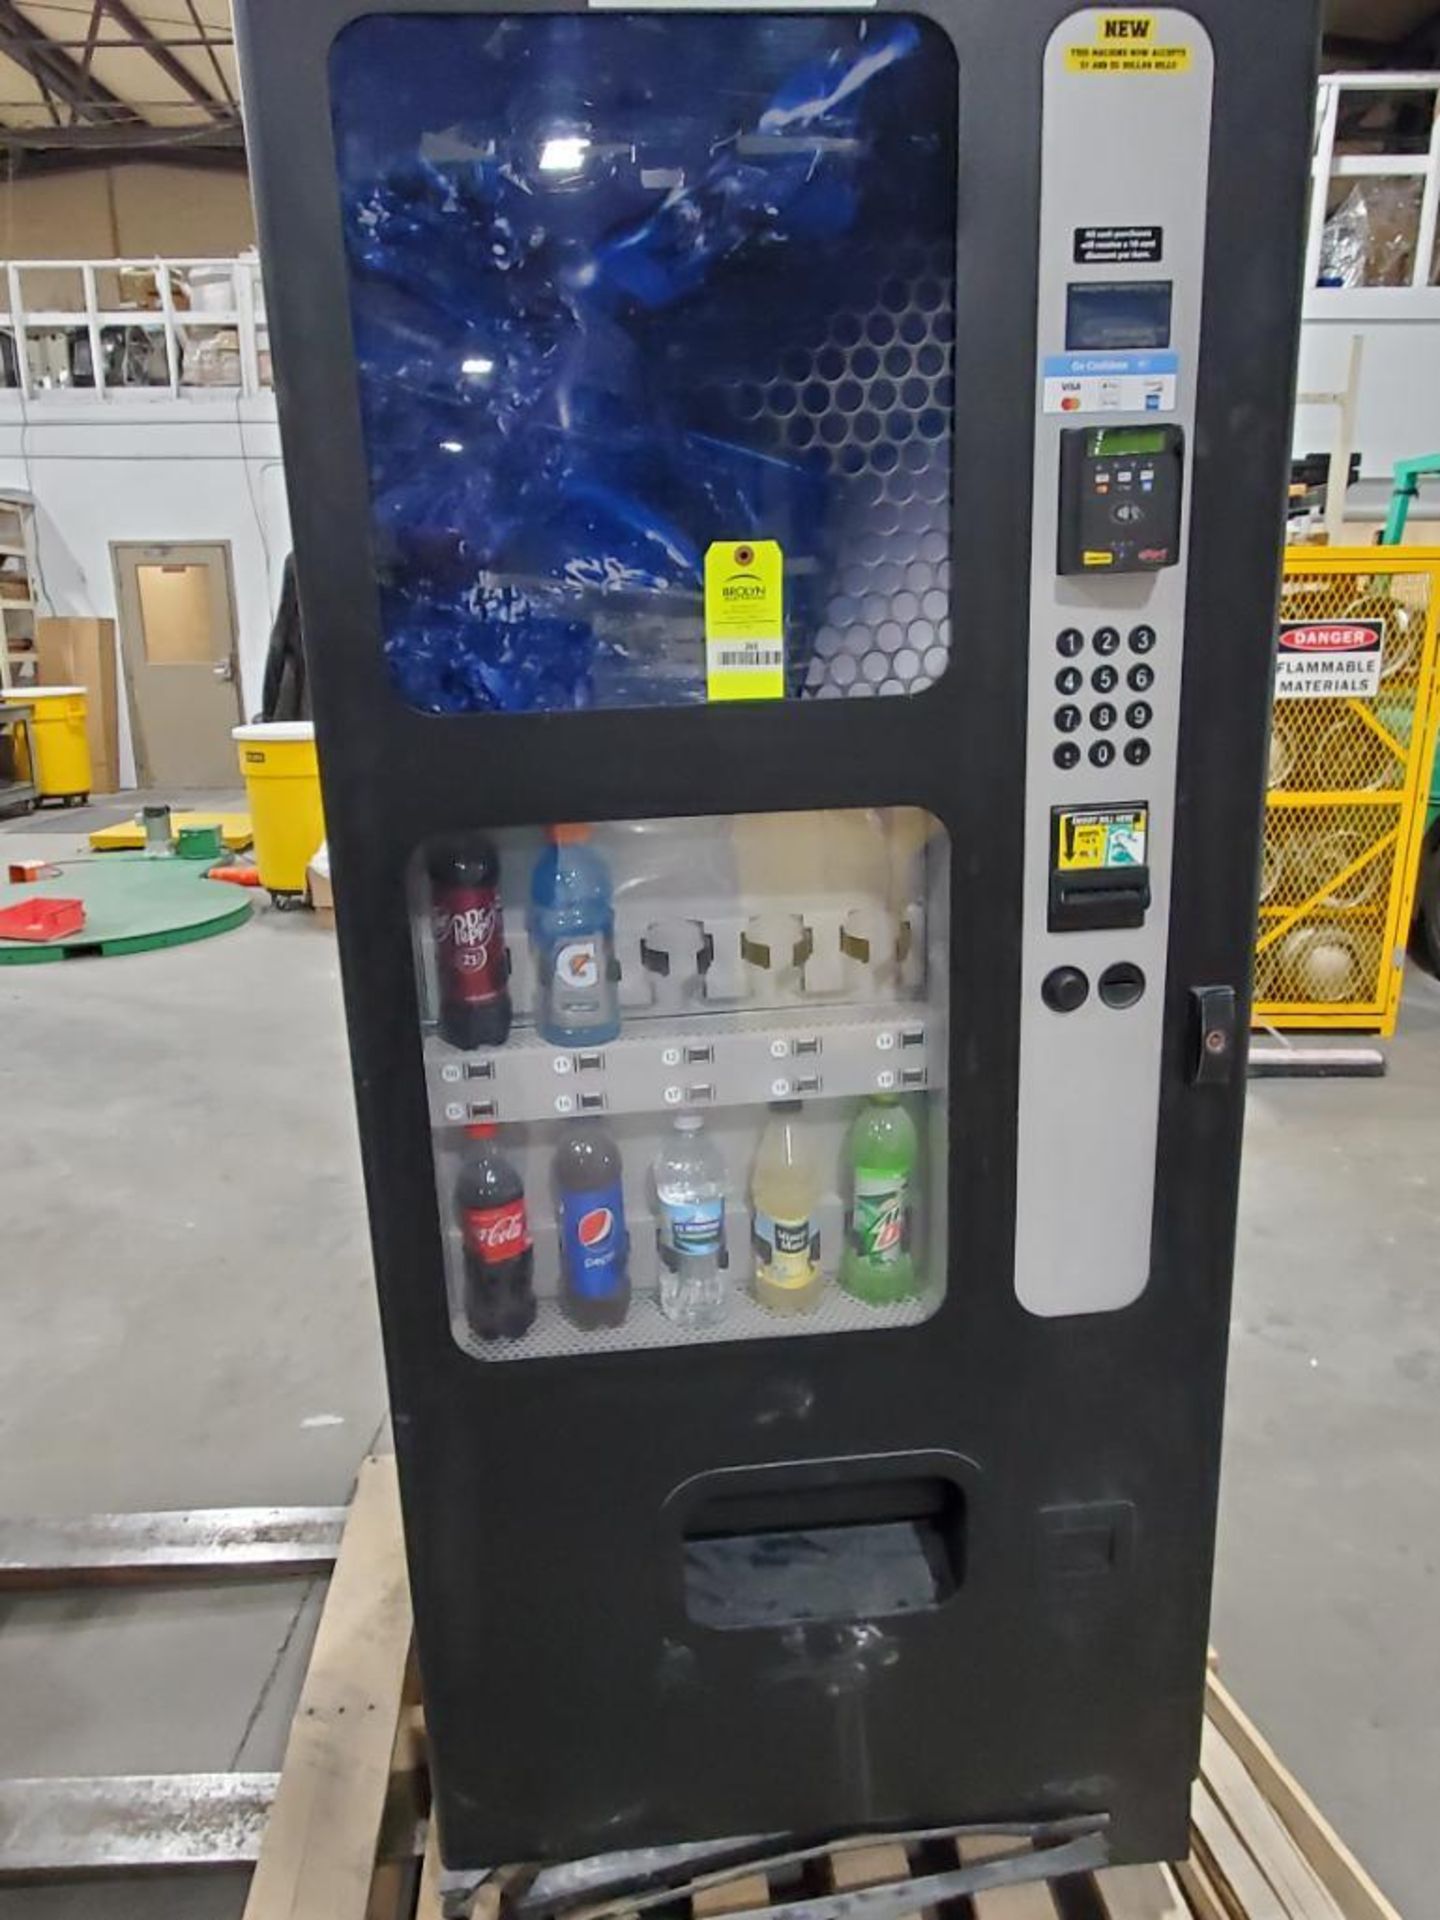 Wittern vending machine. Model 3500.